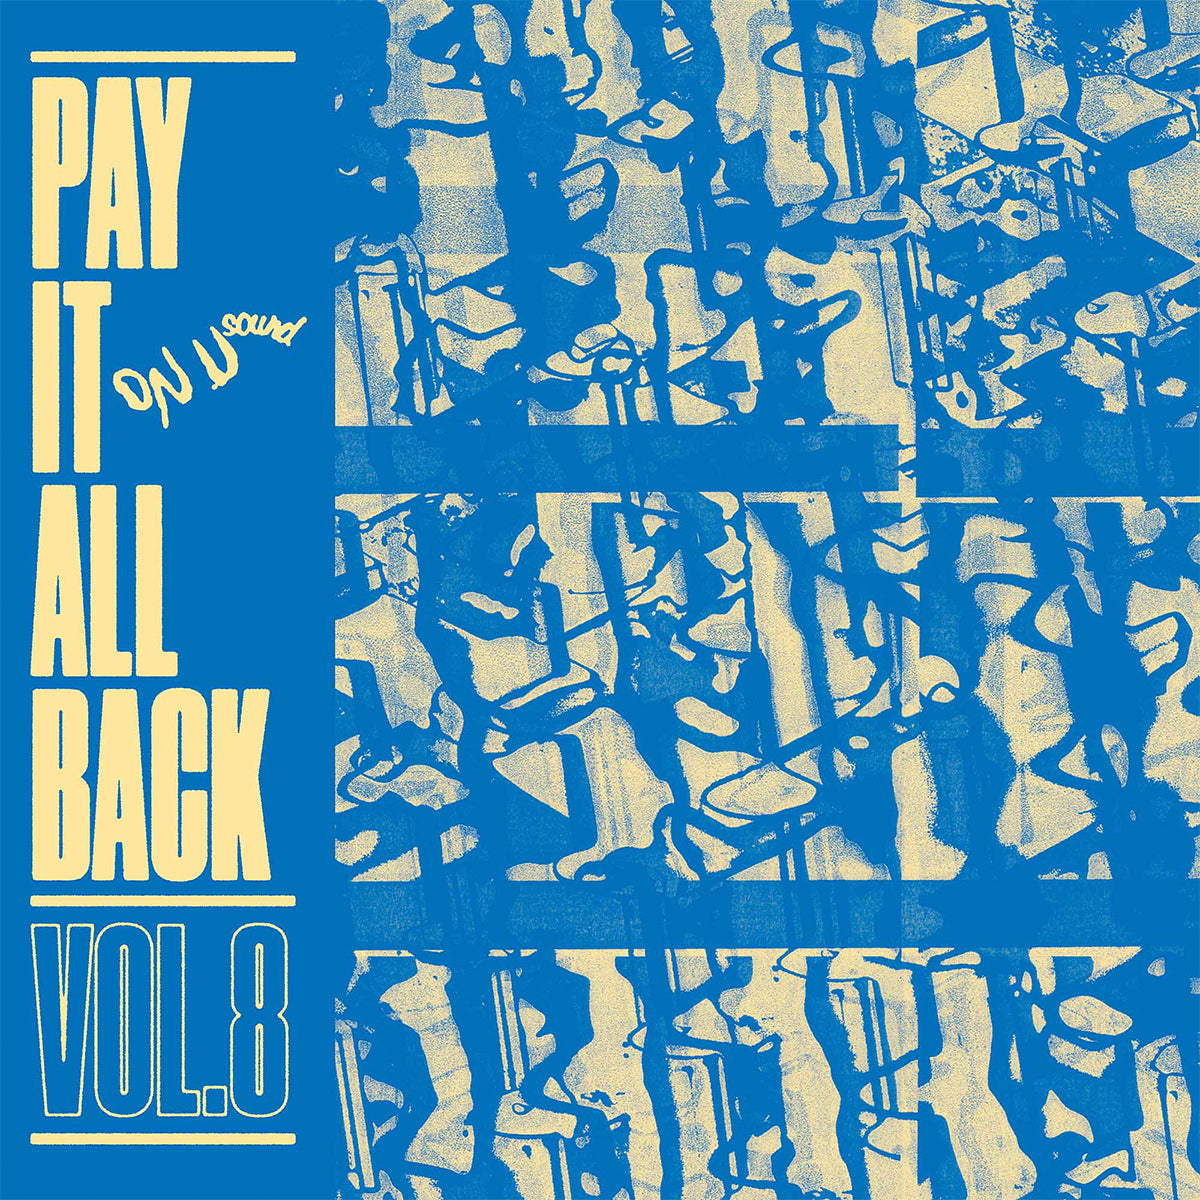 VARIOUS - Pay It All Back Vol 8 - LP + Poster - Transparent Blue Vinyl